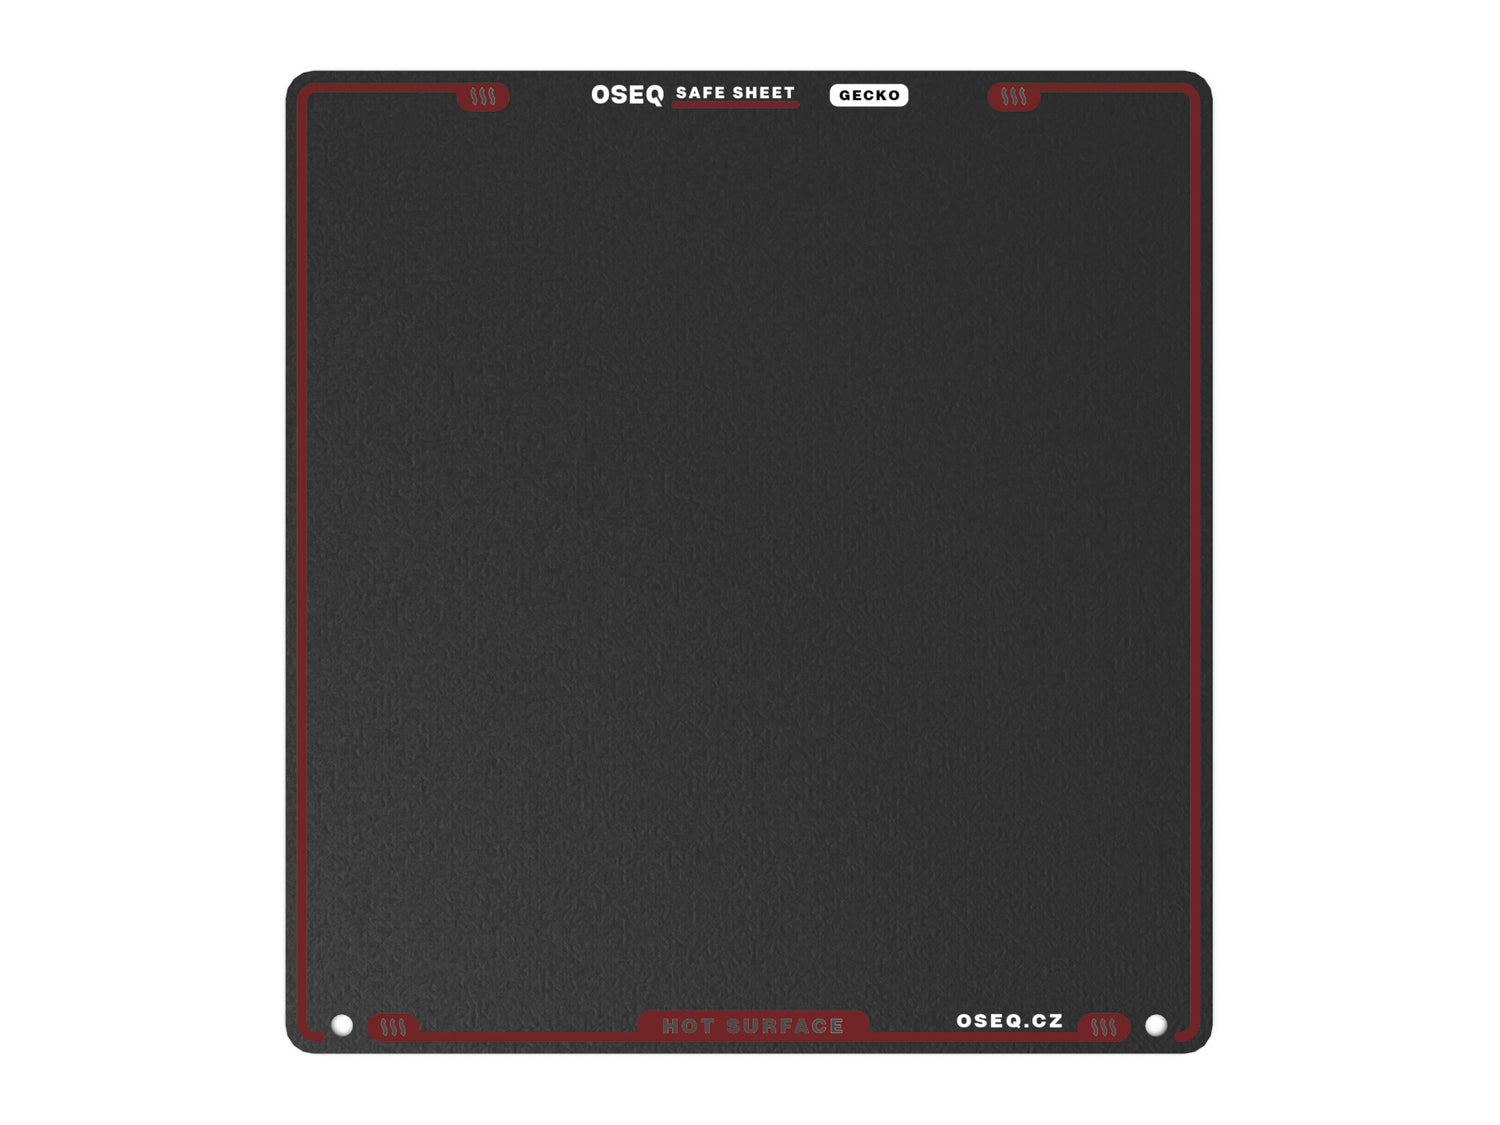 OSEQ SAFE SHEET - GECKO 165x175 mm size is the best 3d print surface.